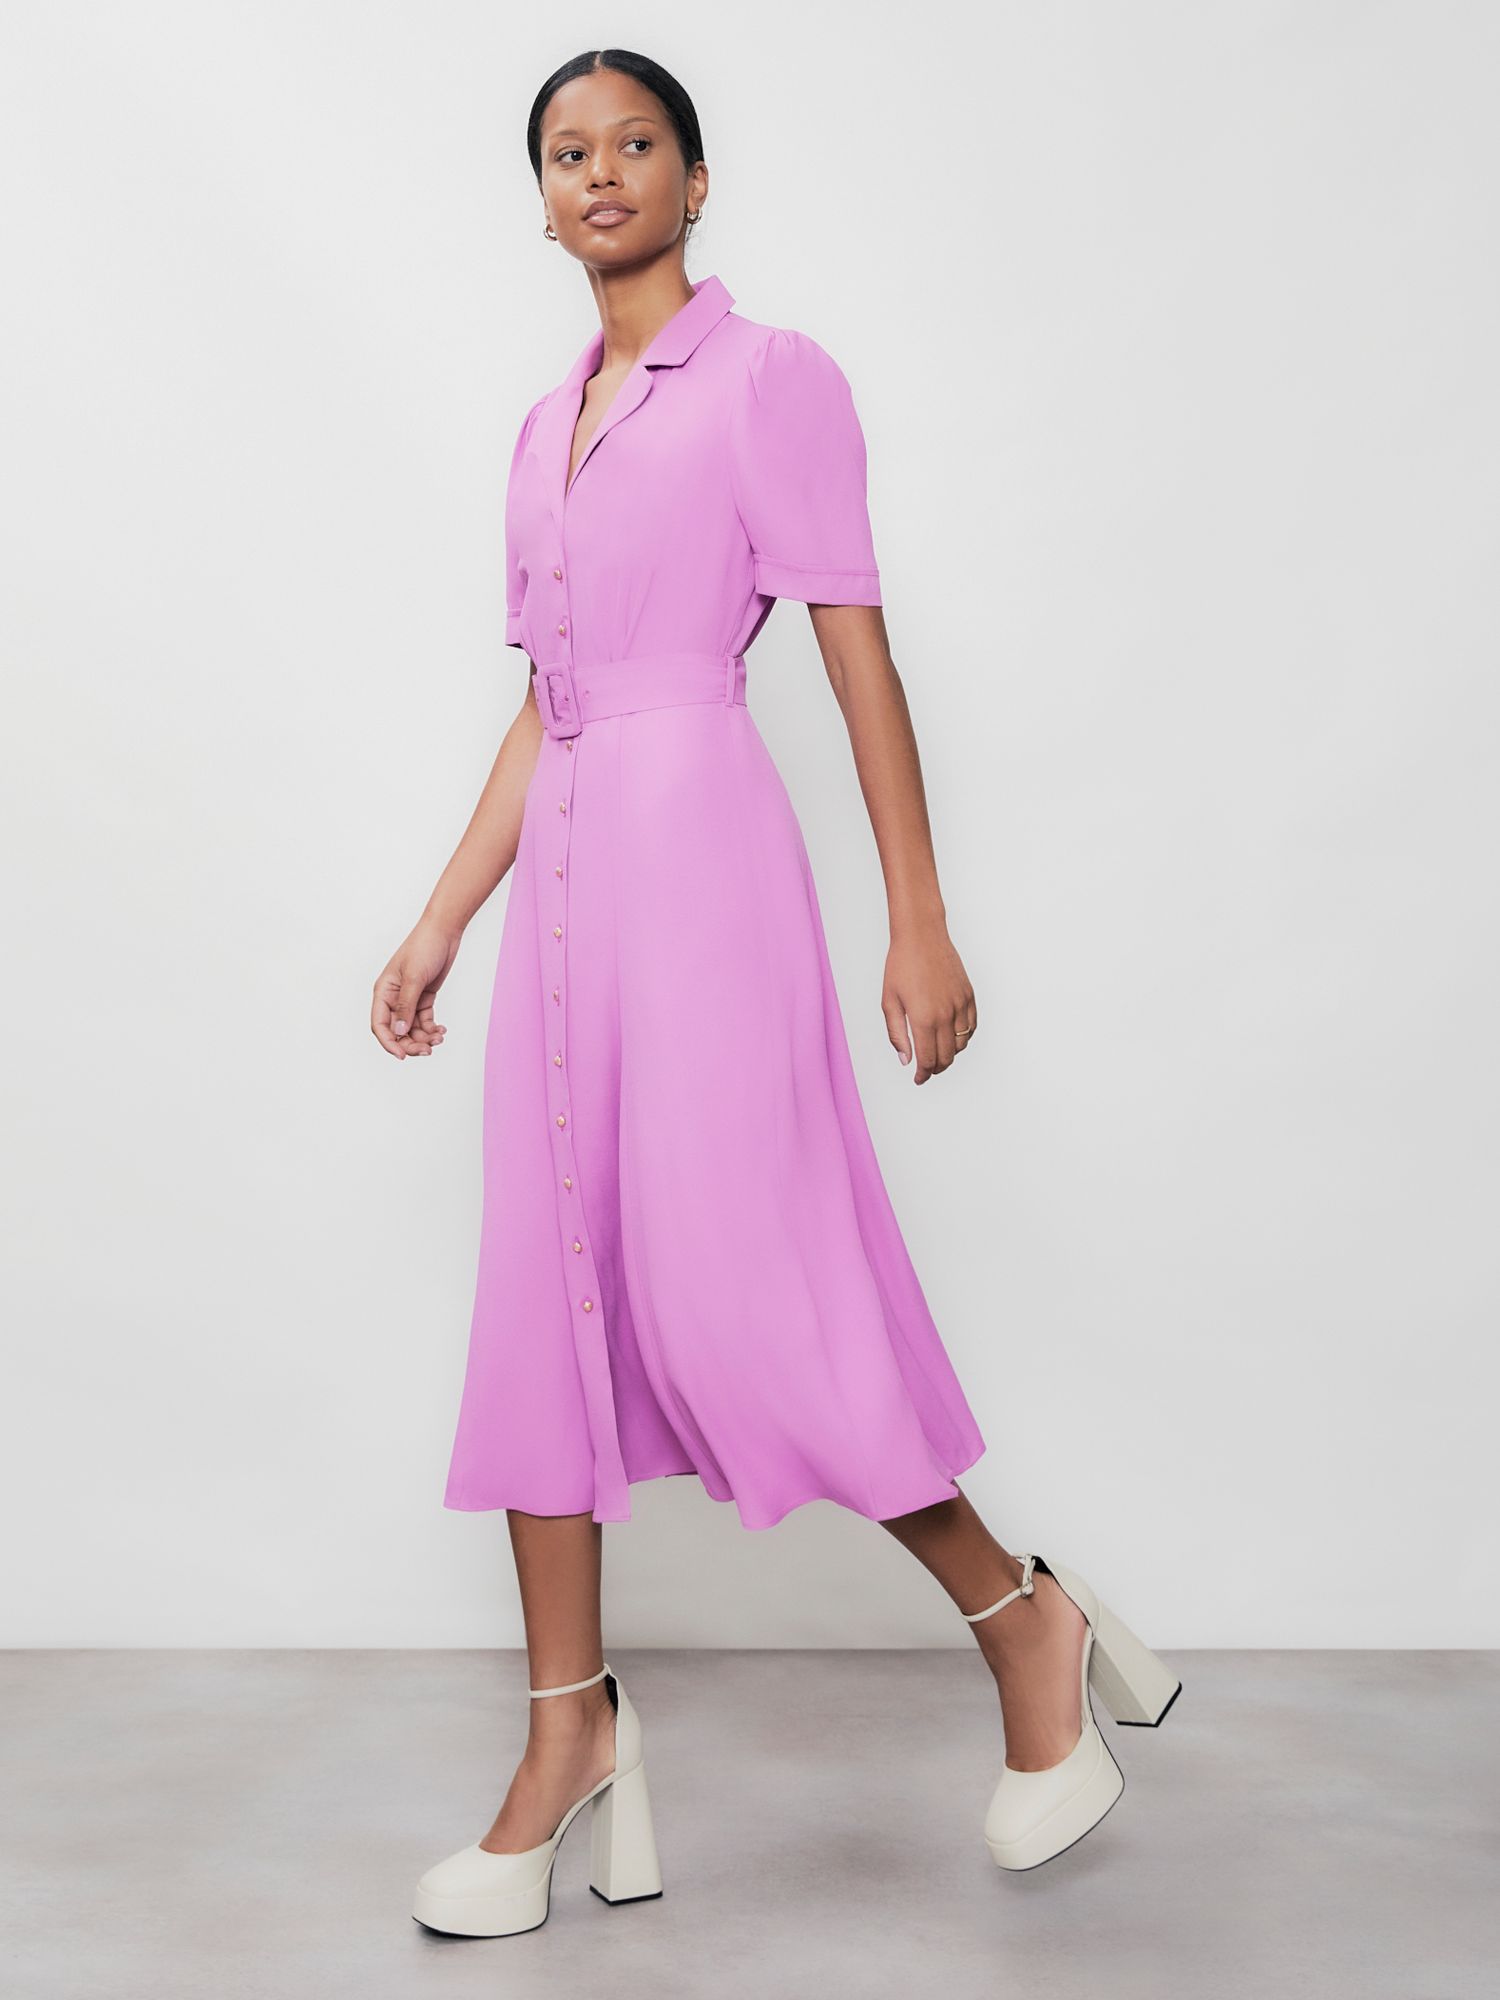 ZARA Pink Jacquard Wrap Dress : 5039/068 : S-M